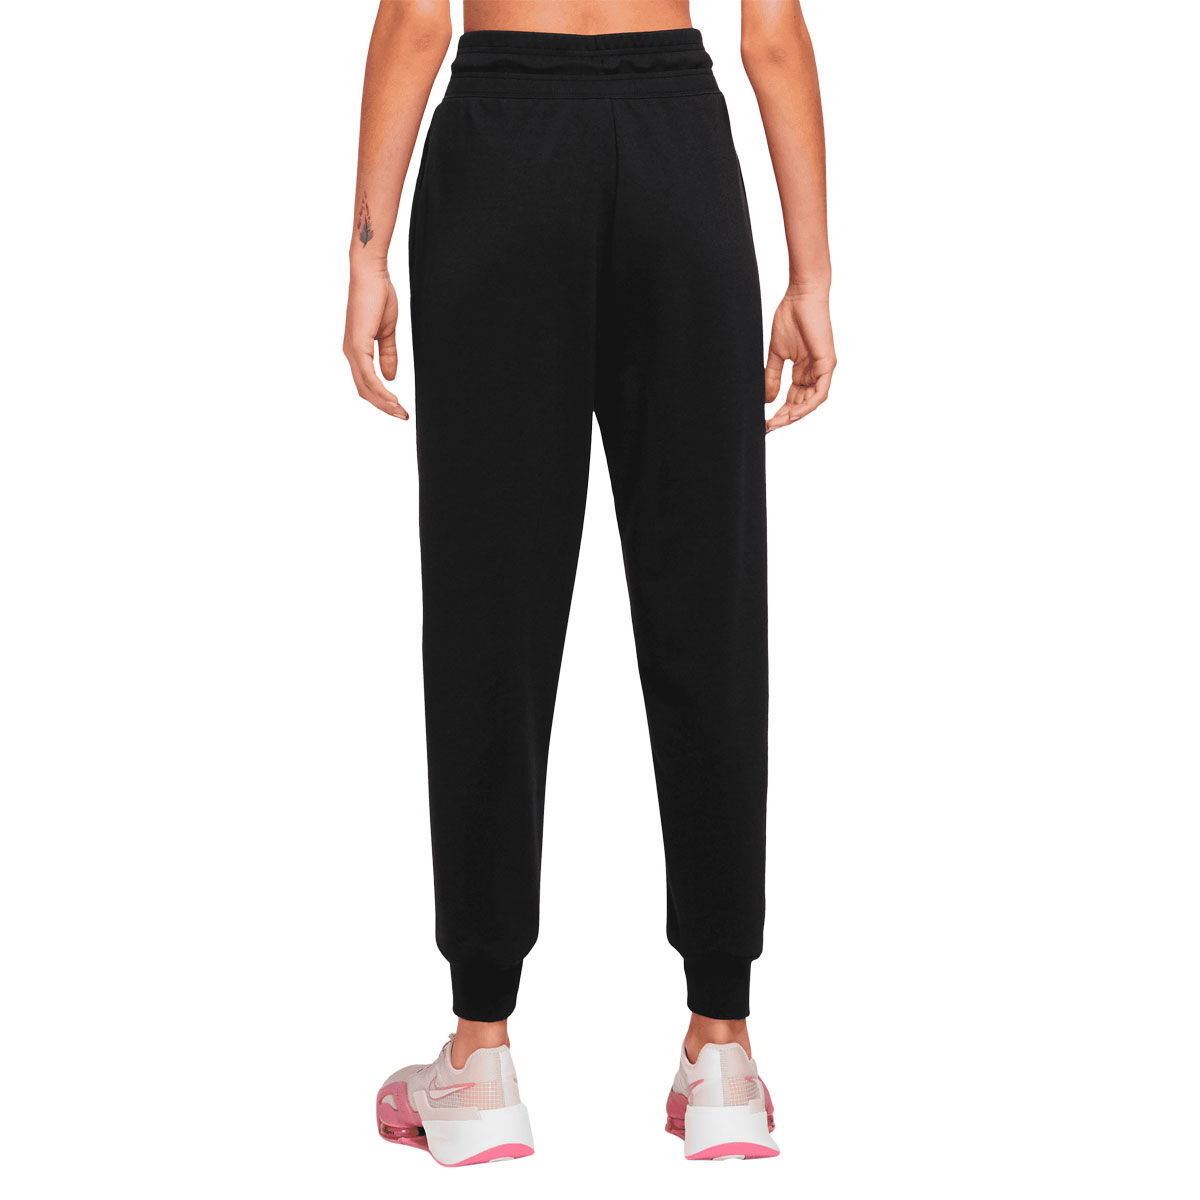 Nike Women's Dri-Fit Classic Fit Training Pants-Black 